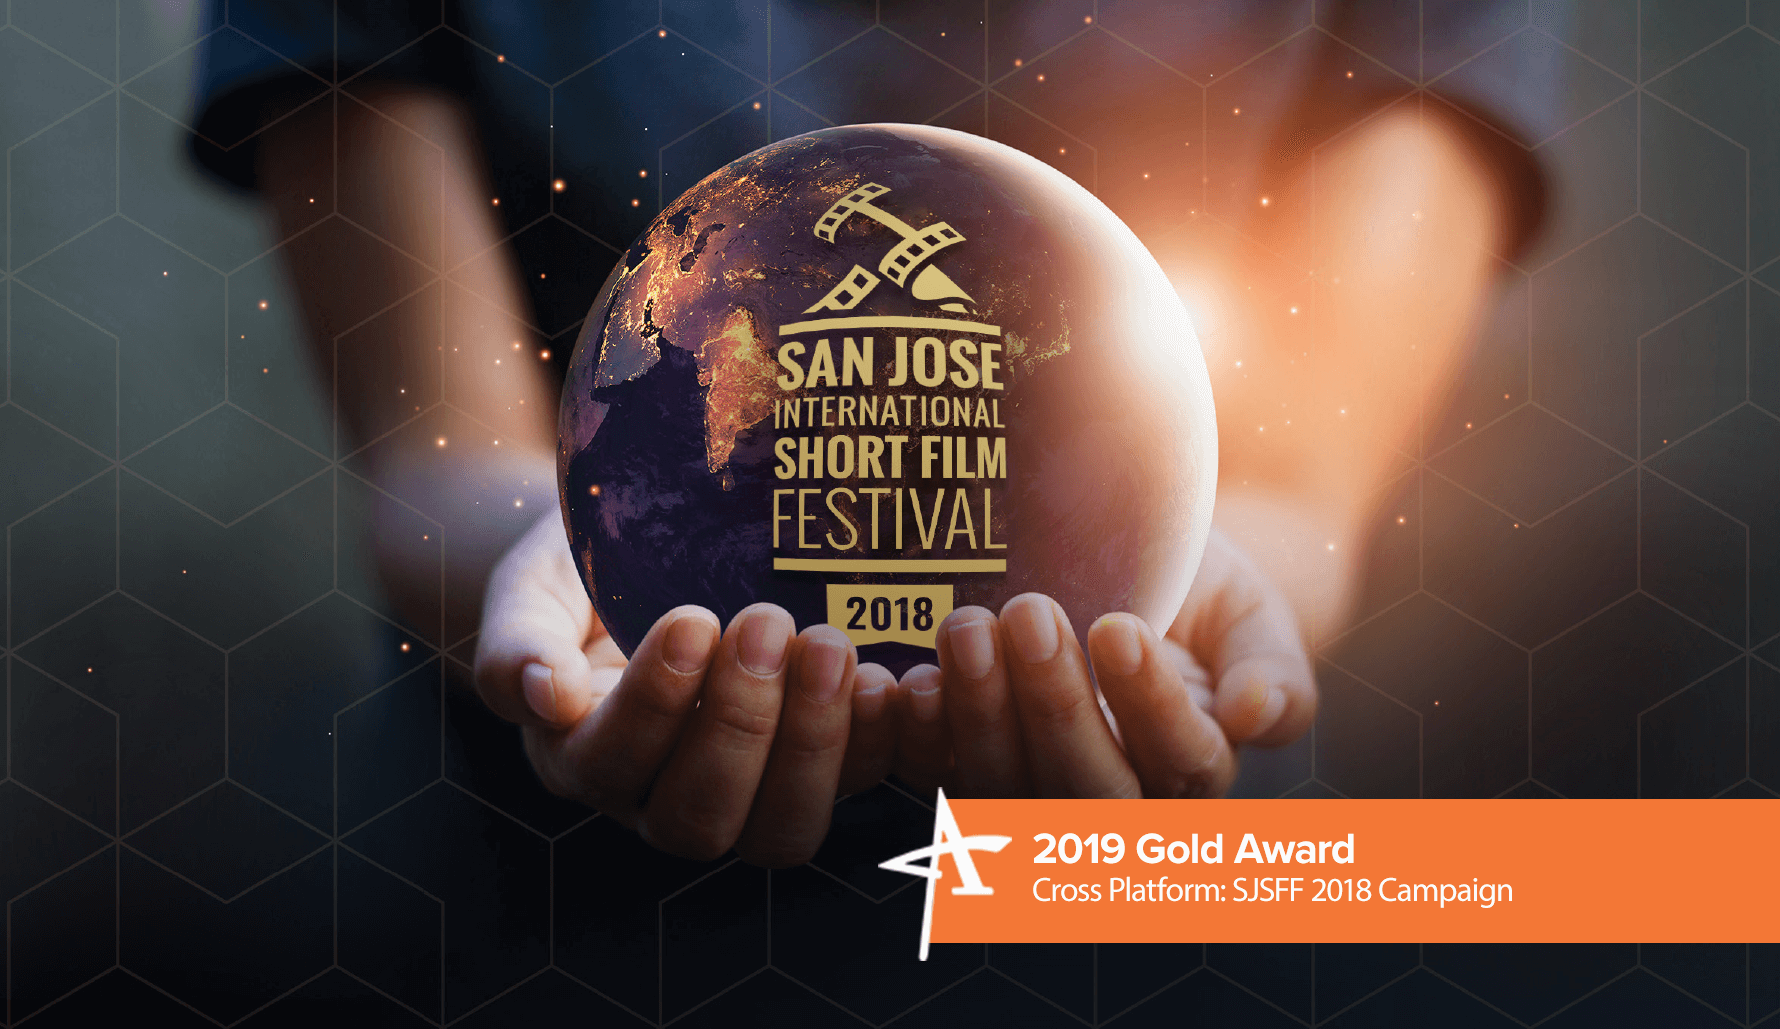 2019 Gold Addy Award - Cross Platform: SJSFF 2018 Campaign